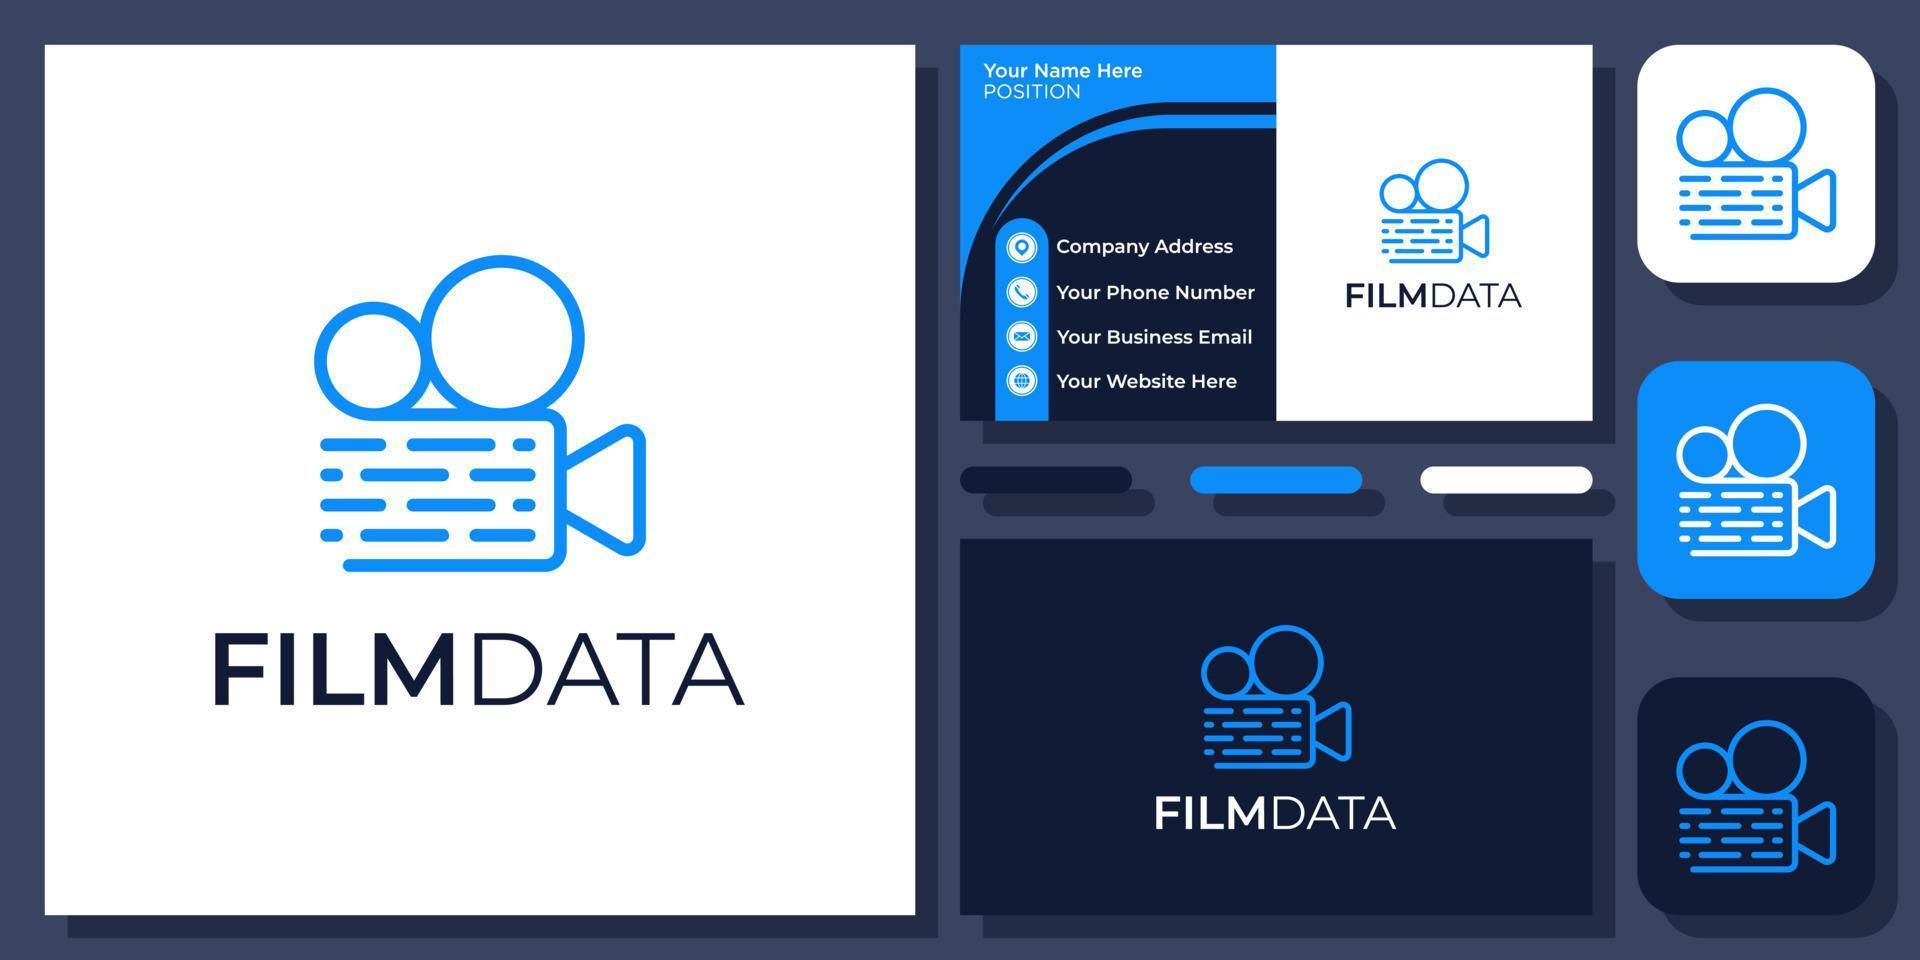 kamera film datateknik digital film bio modern enkel vektor logotypdesign med visitkort